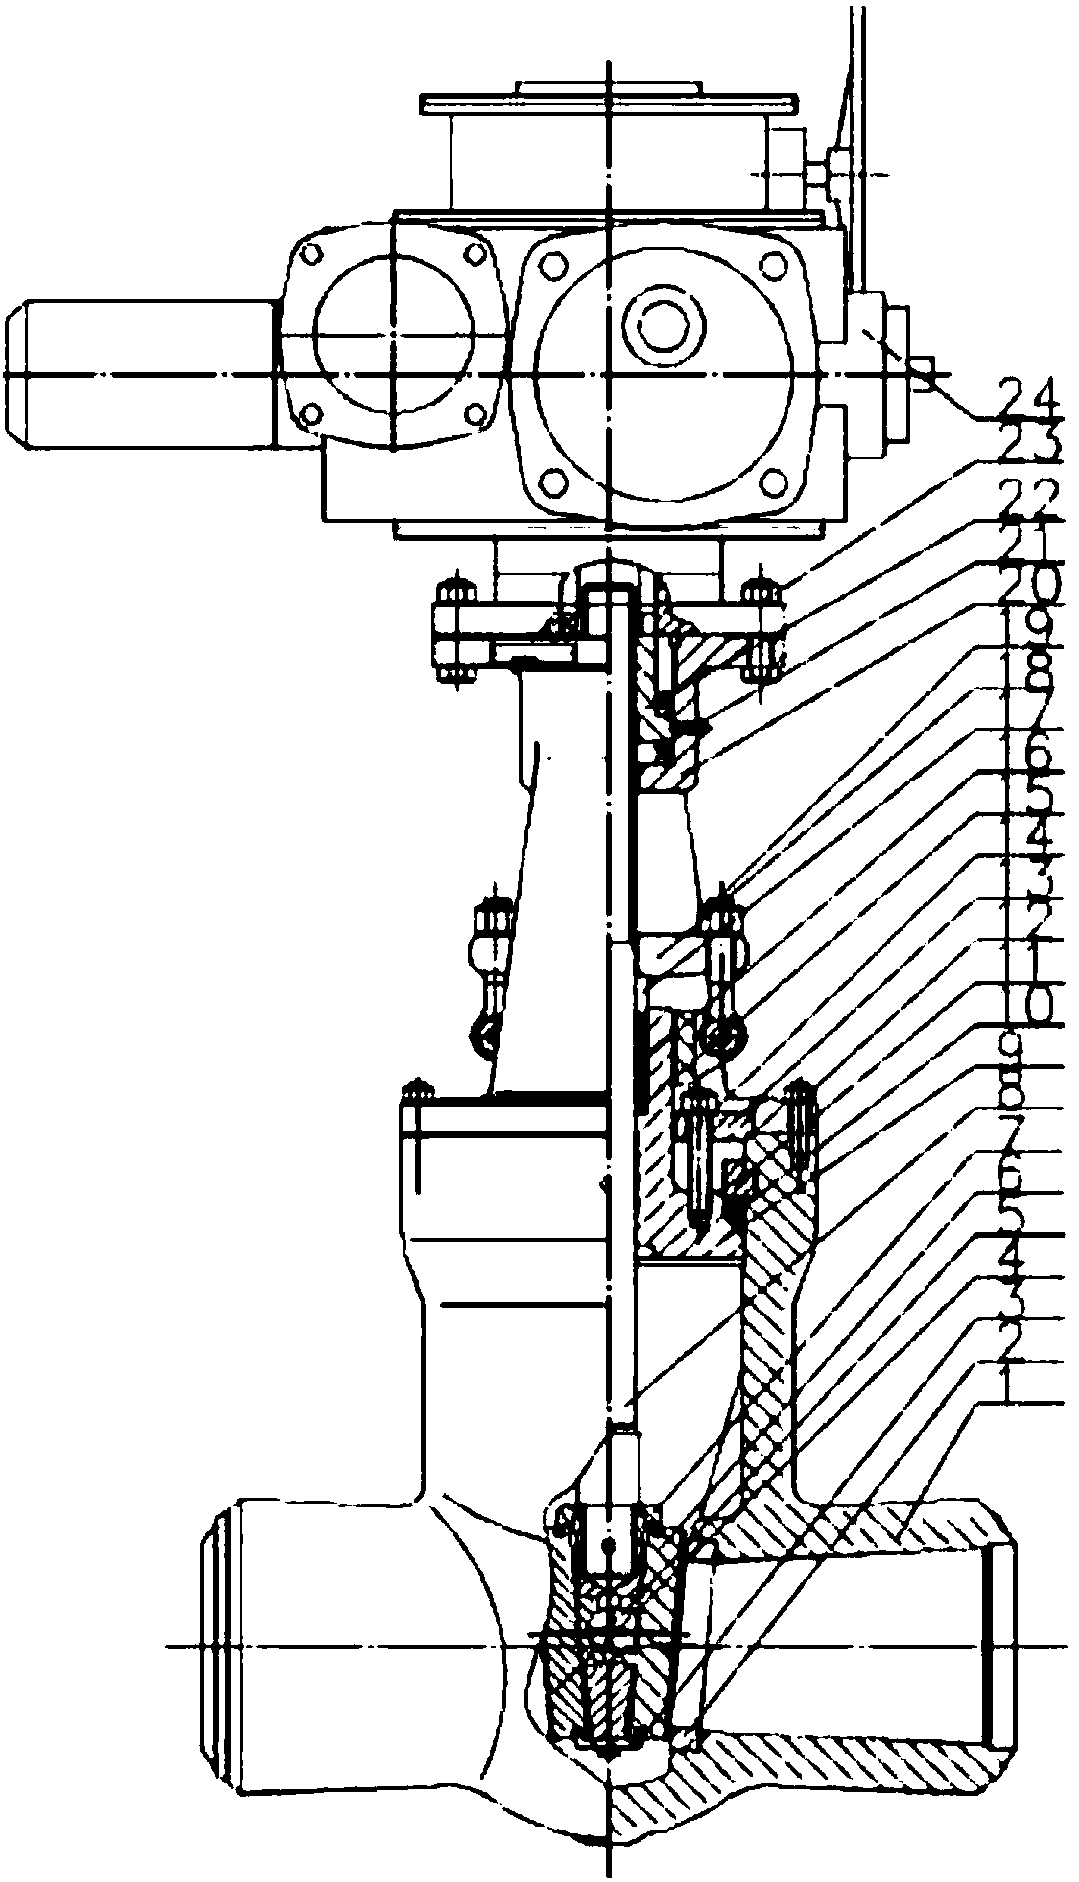 Supercritical forging electric sluice valve with double sluice plates